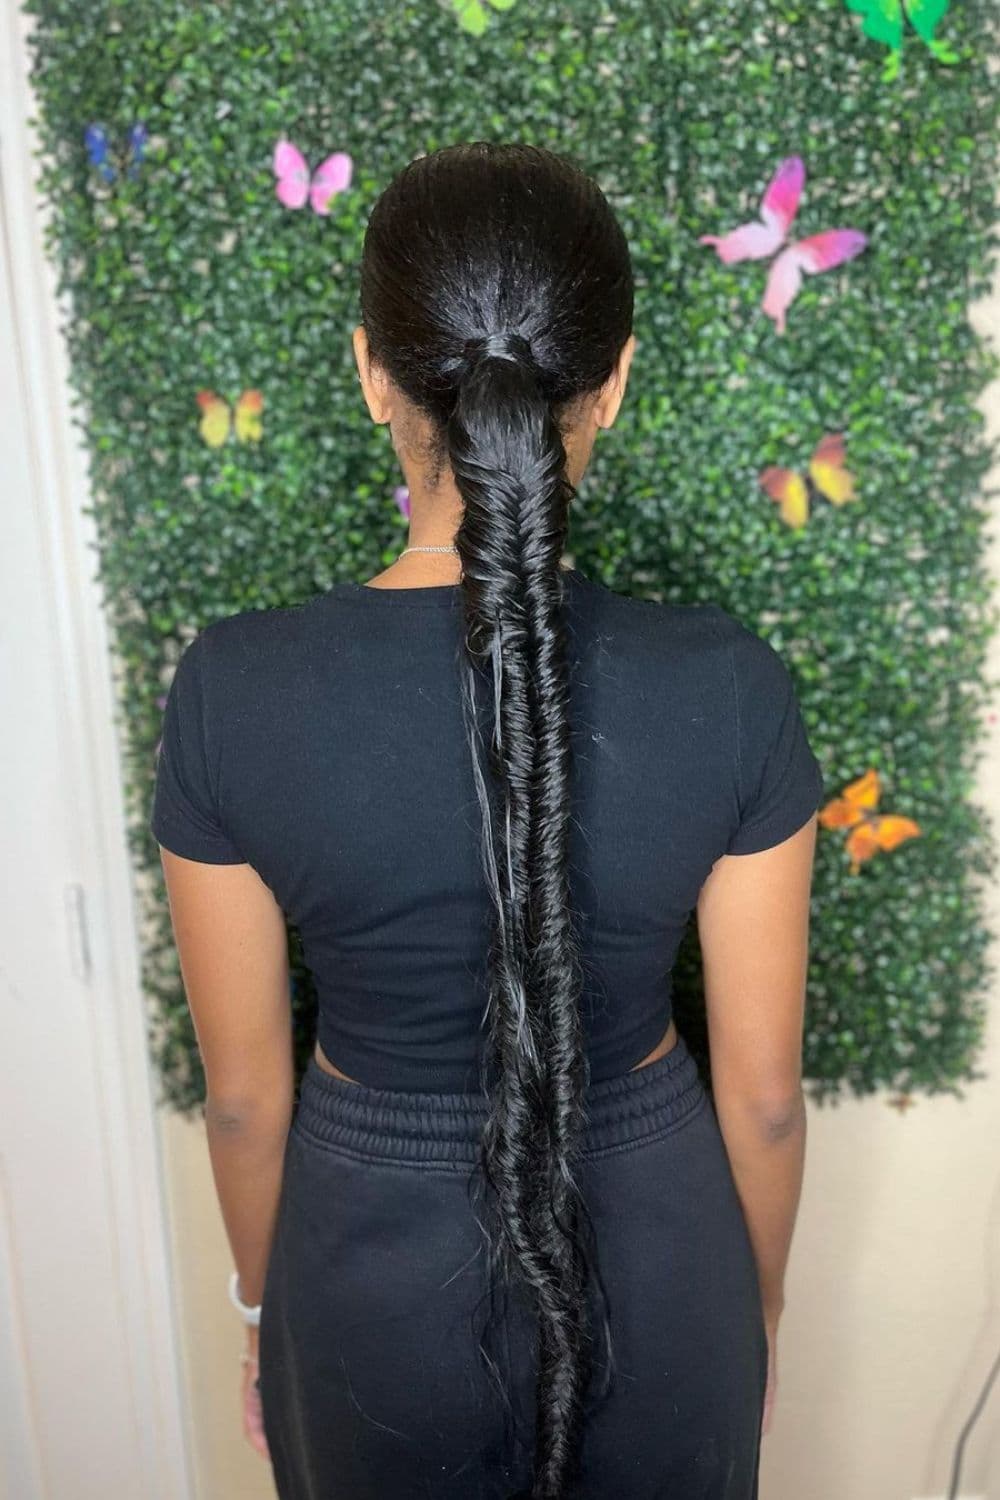 A woman with a black butt-length fishtail braid.